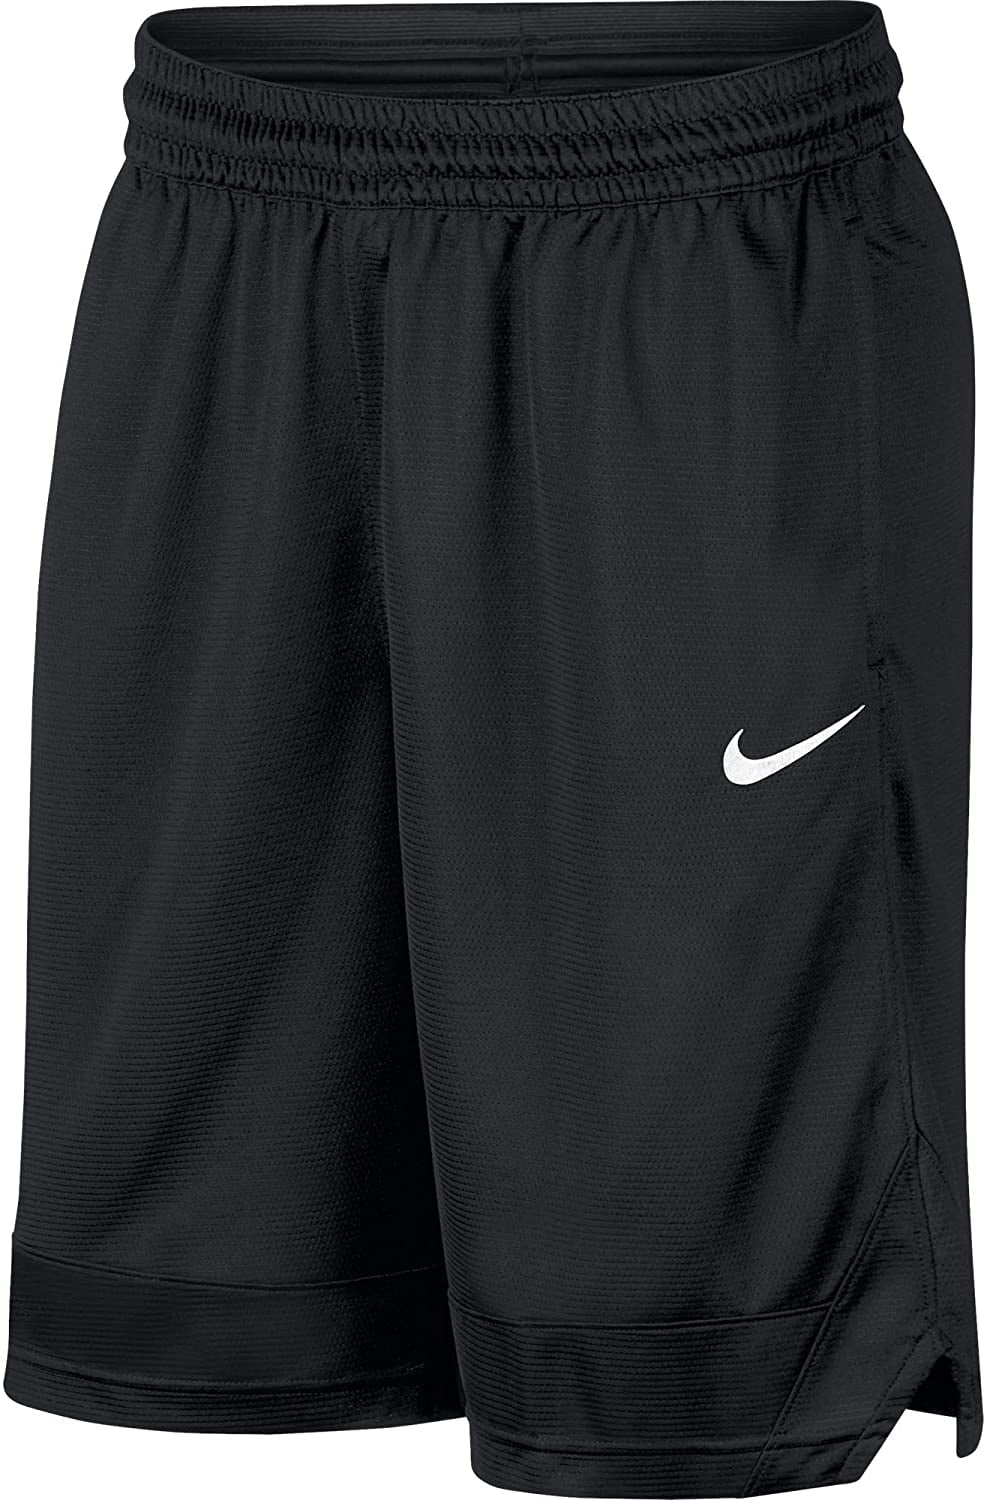 nike athletic shorts with pockets